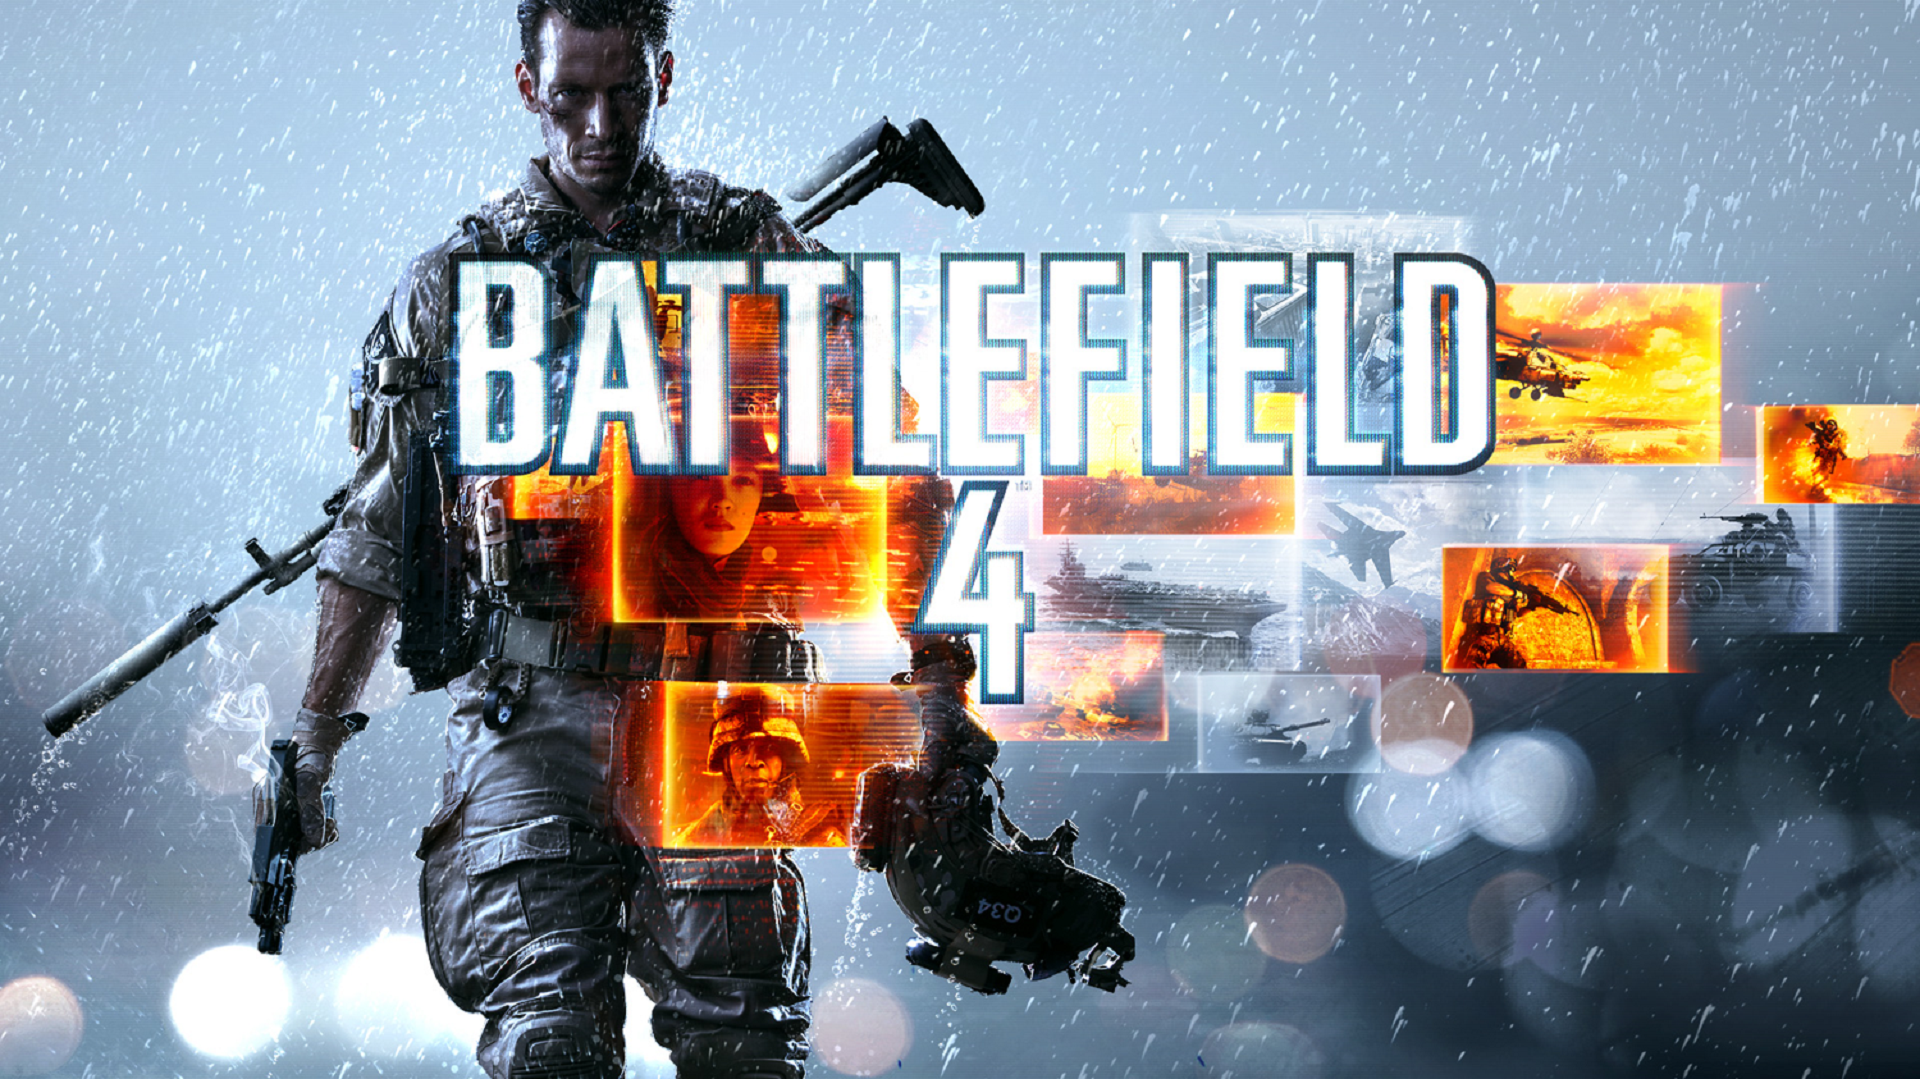 118 Battlefield 4 HD Wallpapers | Backgrounds - Wallpaper Abyss ...